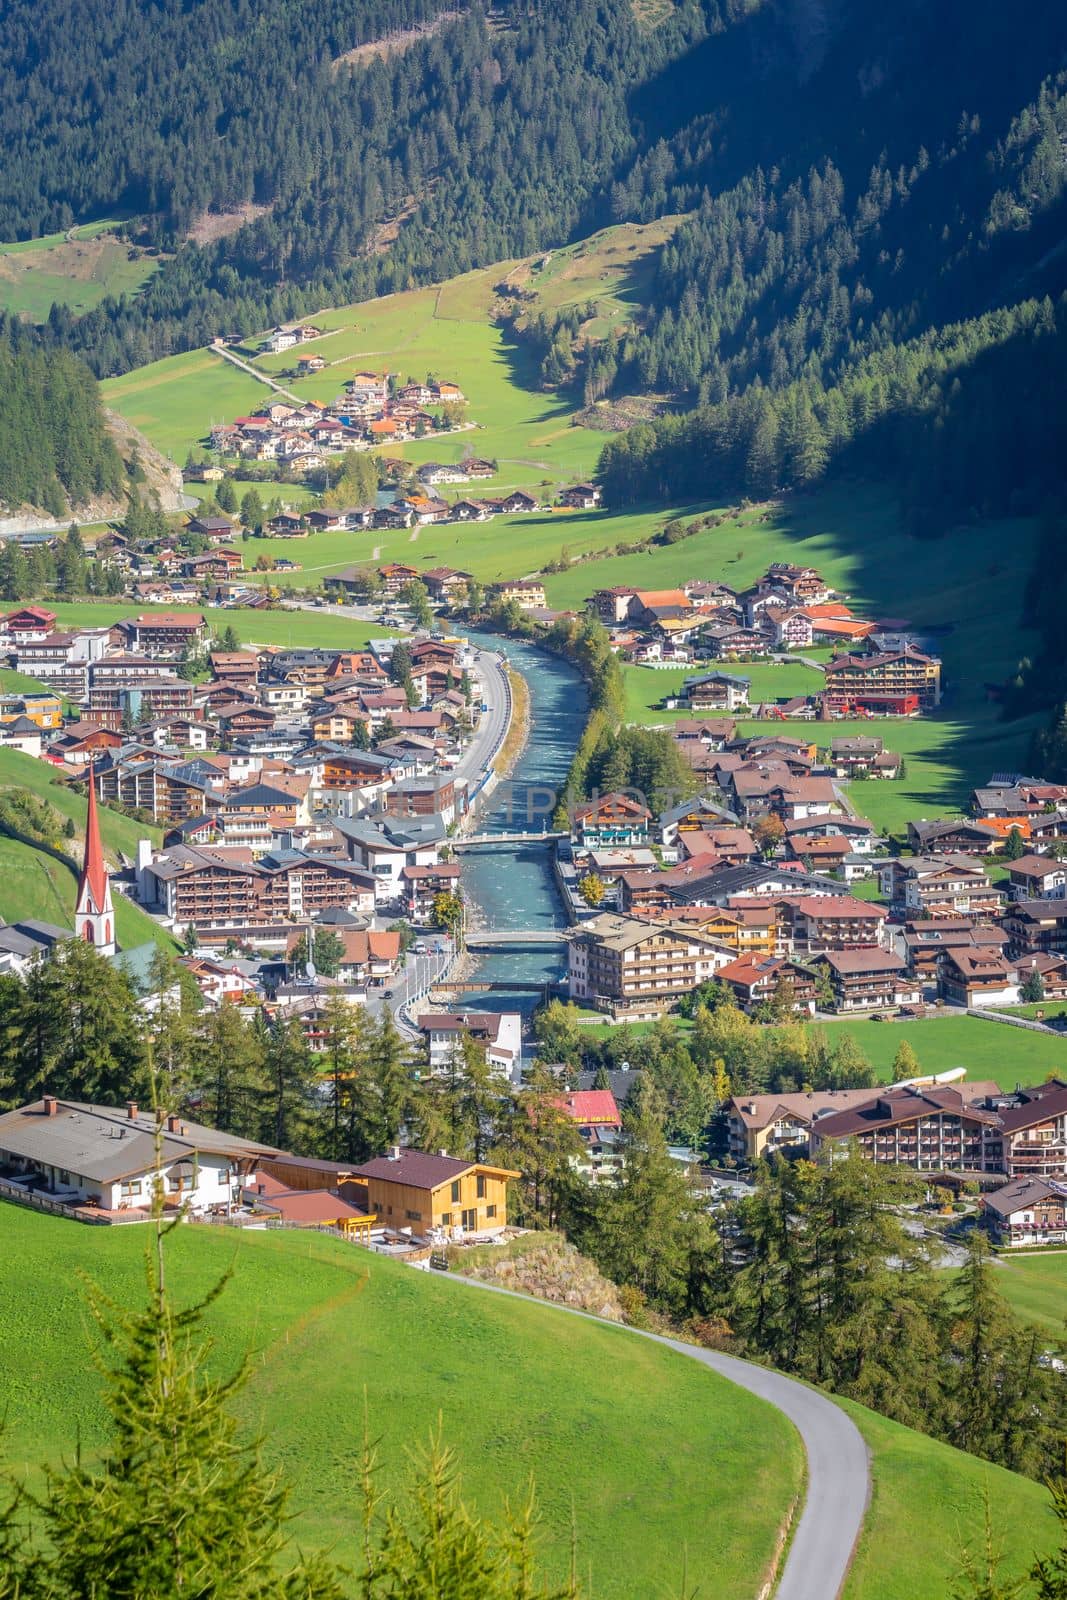 Soelden resort village in Otztal alps, Tyrol, Austria border with Italy